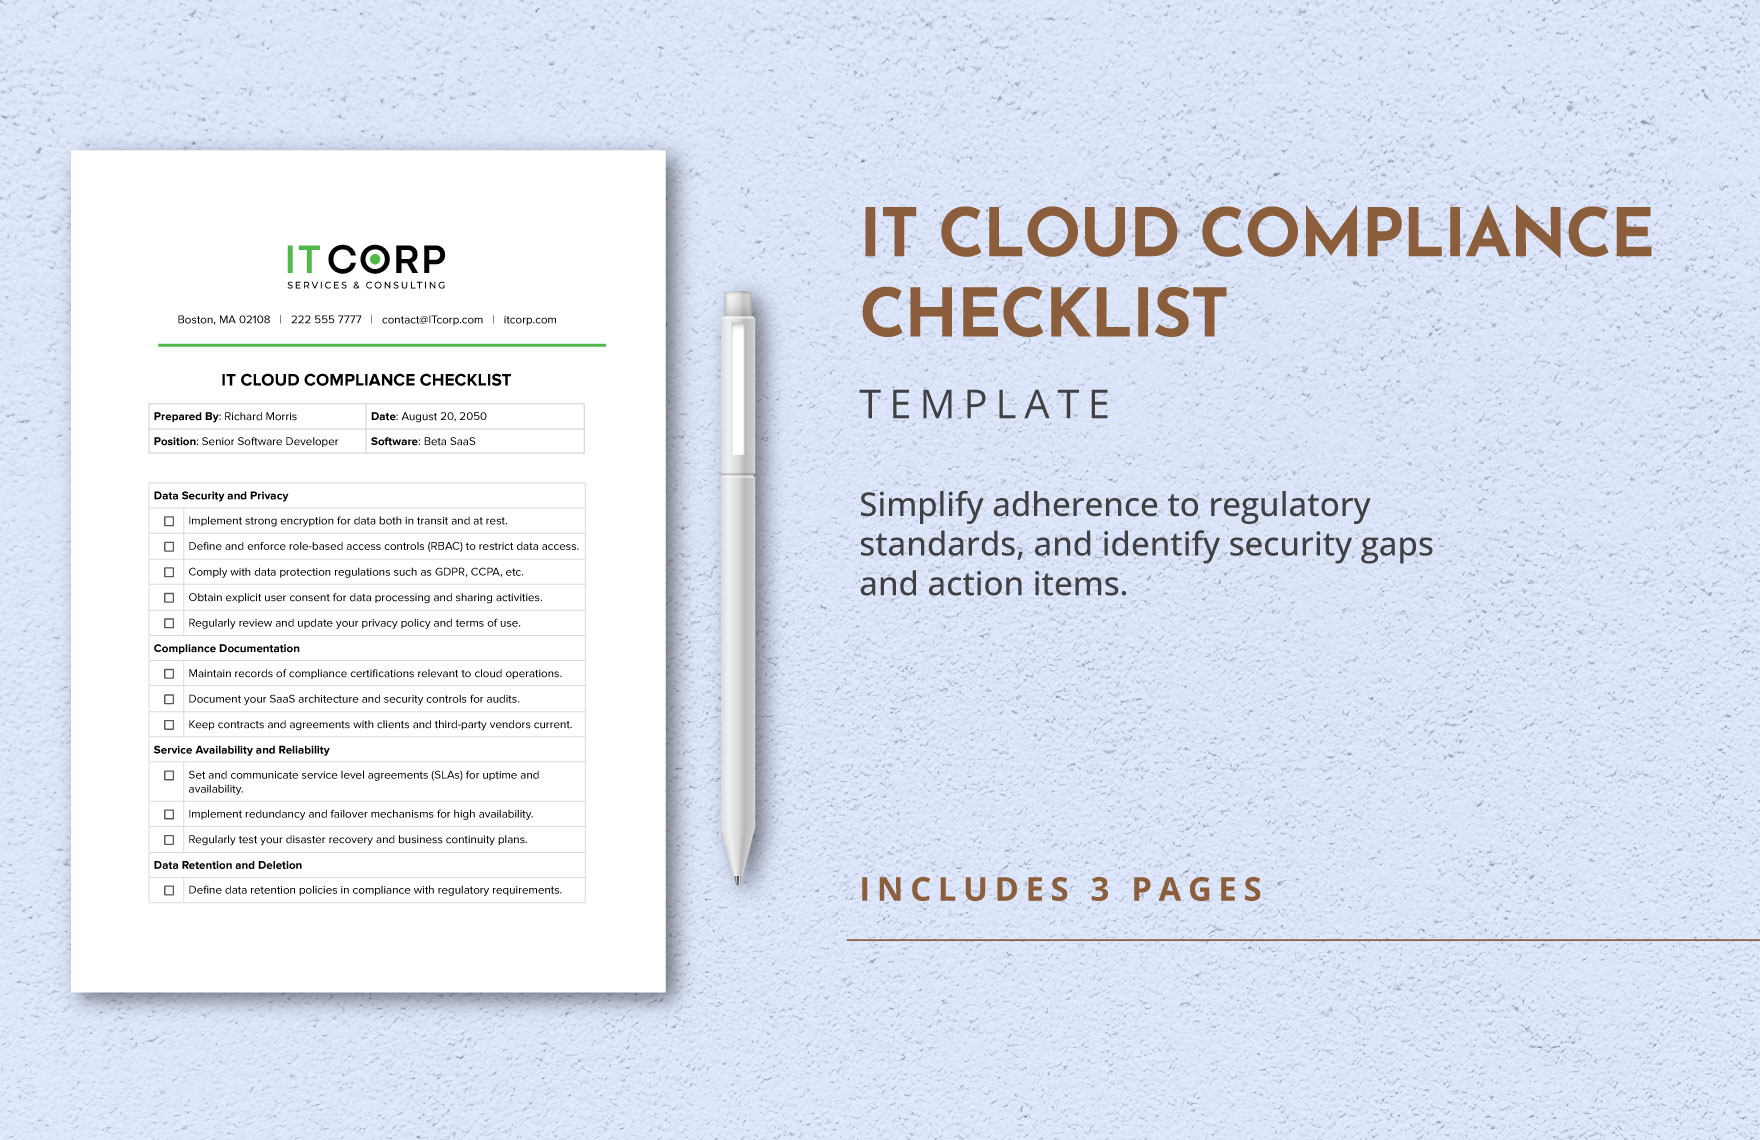 IT Cloud Compliance Checklist Template in Word, Google Docs, PDF